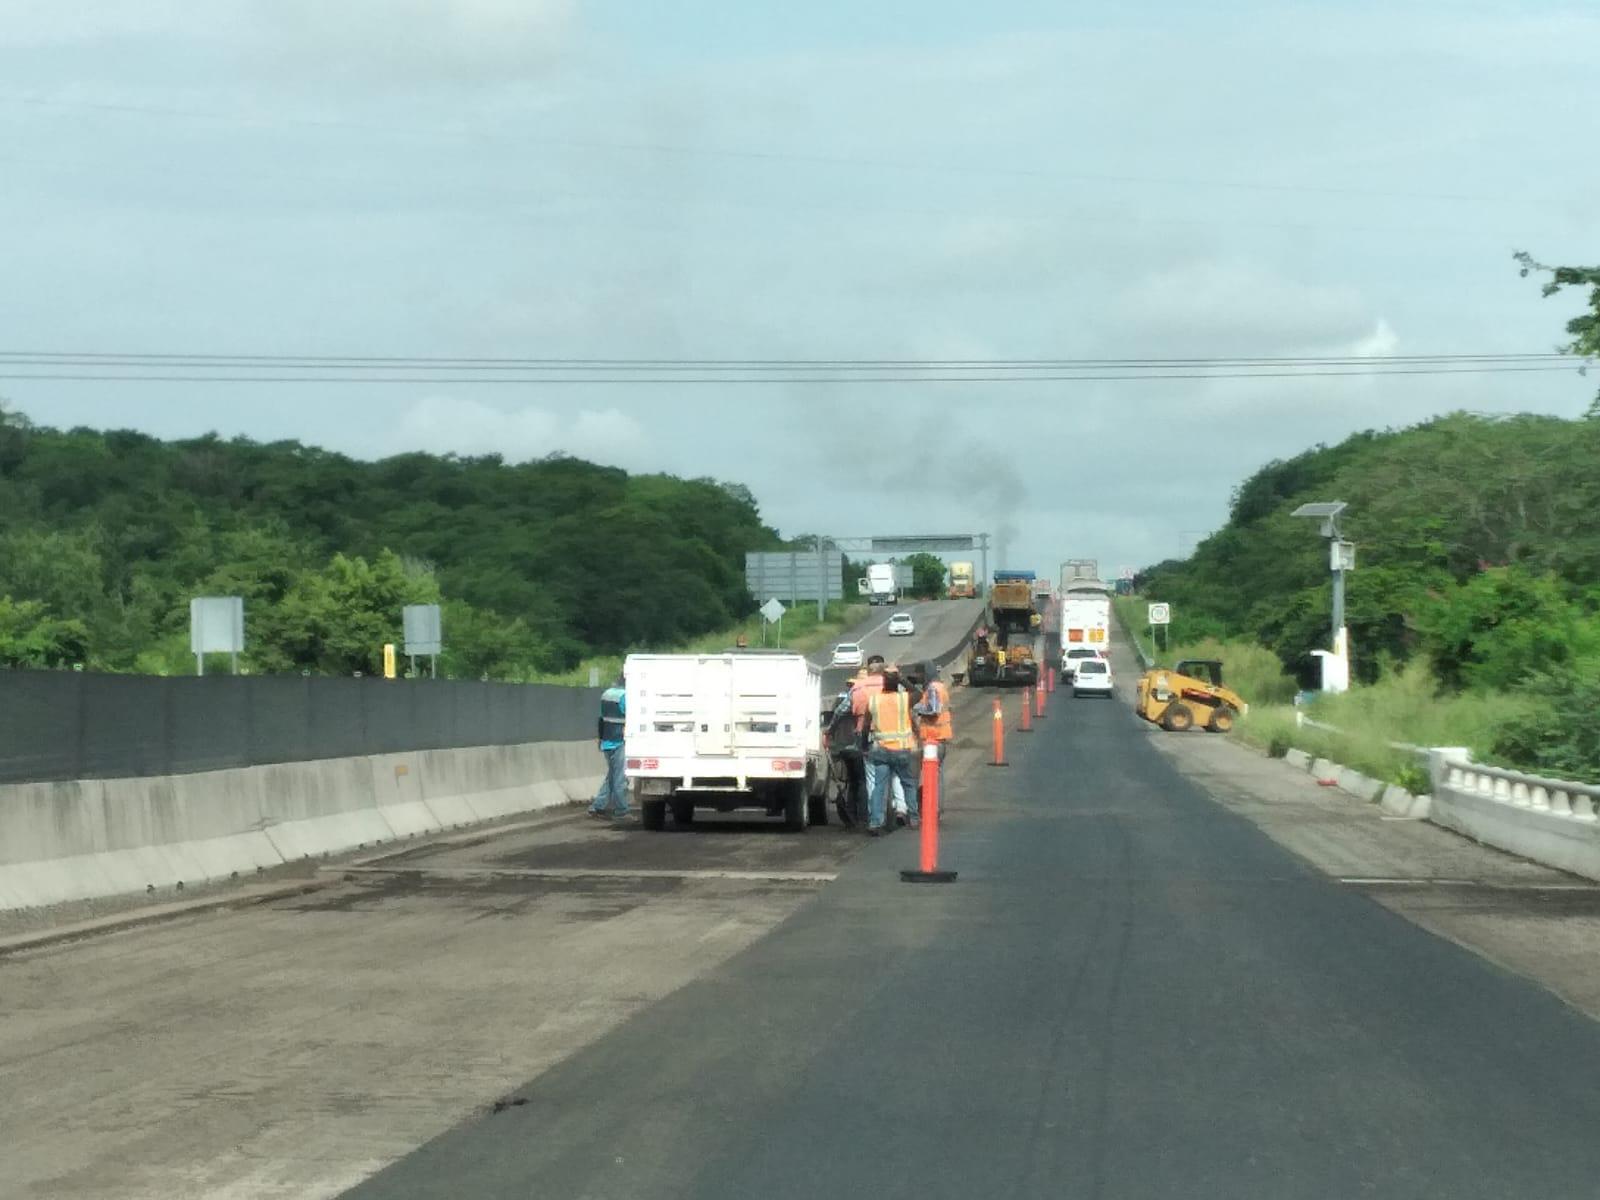 $!Por retén de la FGR en caseta de Mármol, se congestiona la autopista Mazatlán-Culiacán